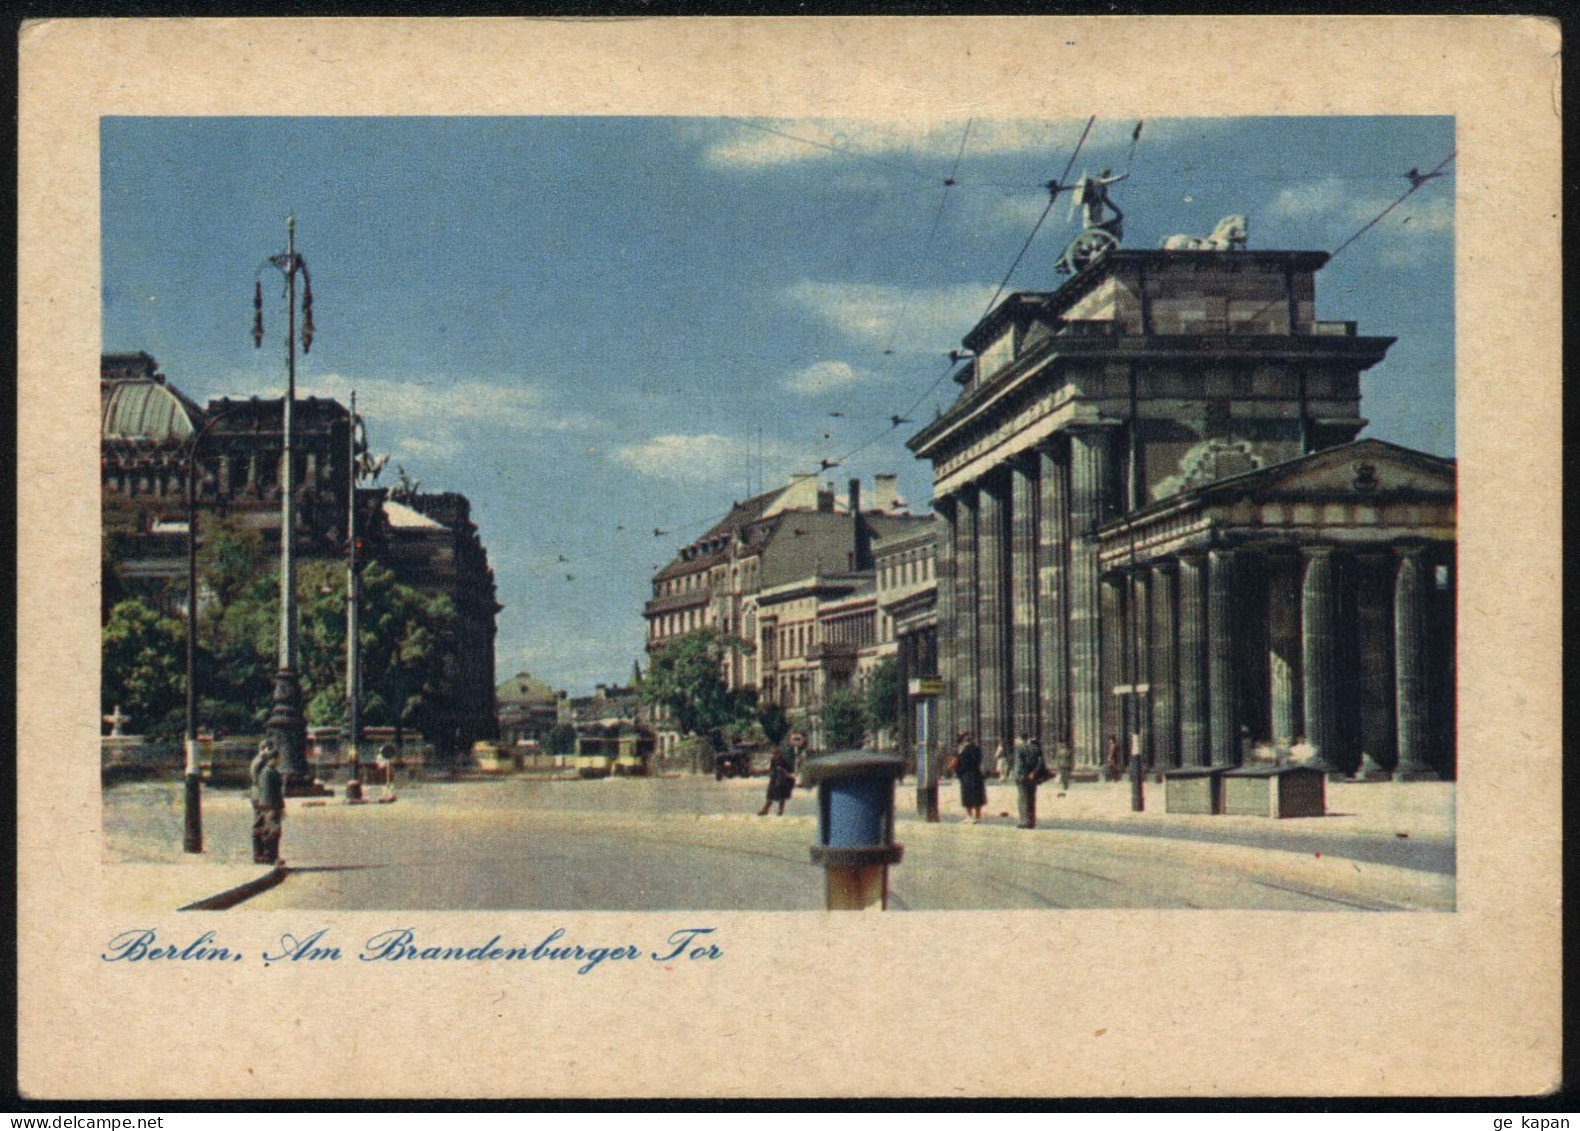 1940 GERMANY BERLIN Am Branderburger Tor - Porte De Brandebourg